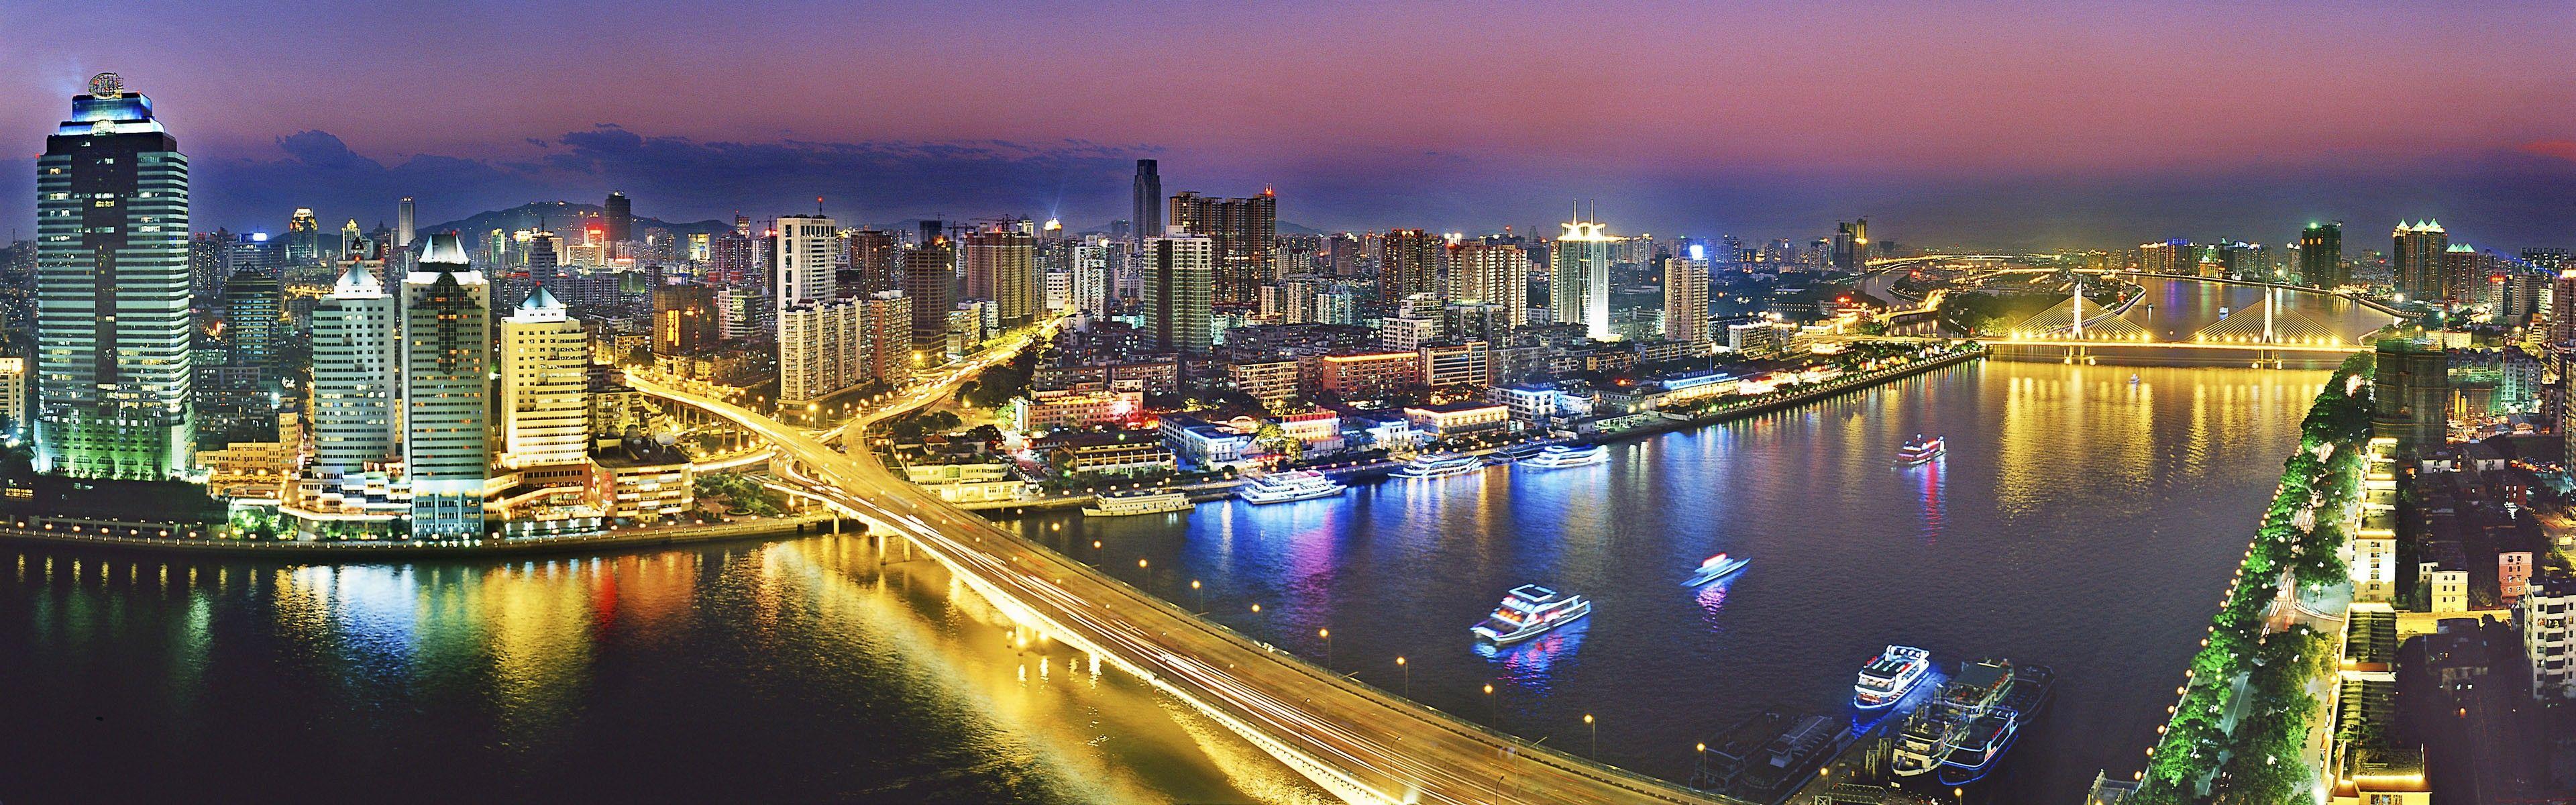 Urban nightlife guangzhou china Travel HD Wallpaper